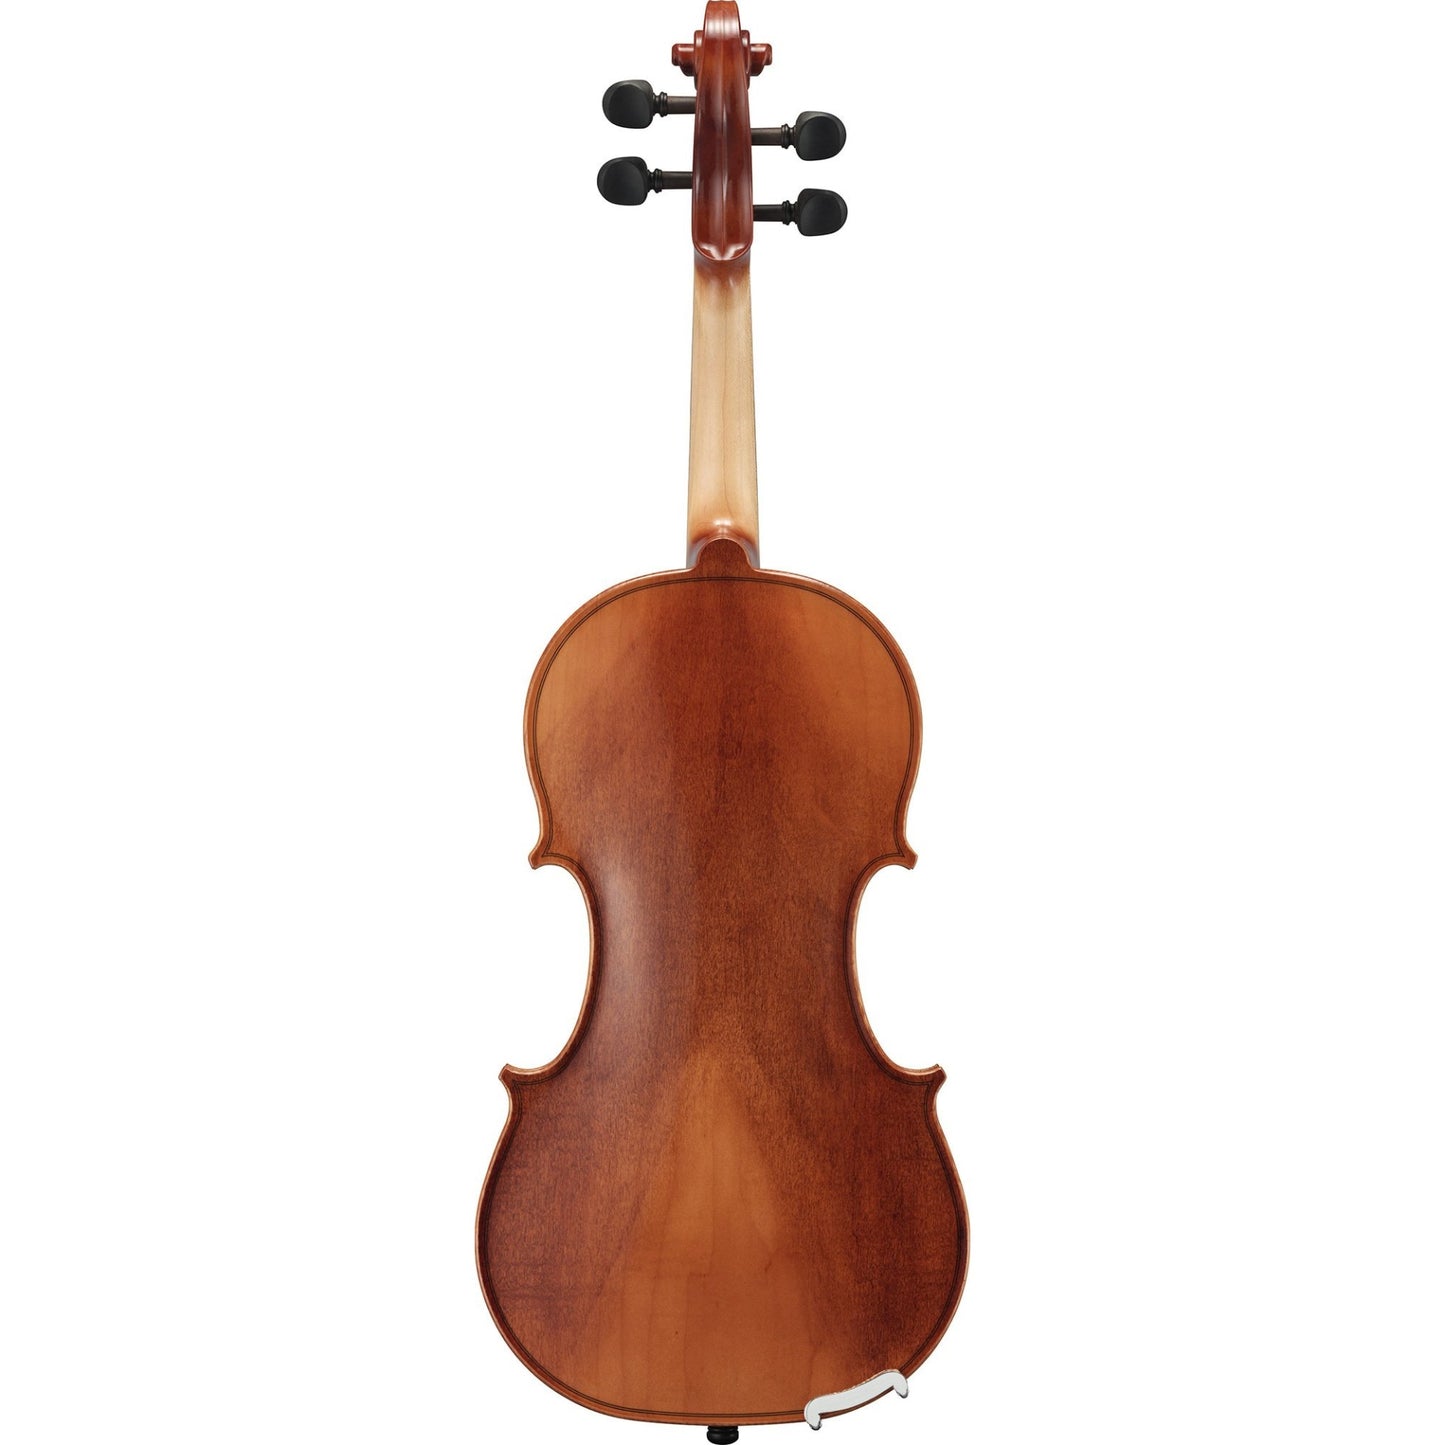 Yamaha YVN Model 3 Student Violin Full Size